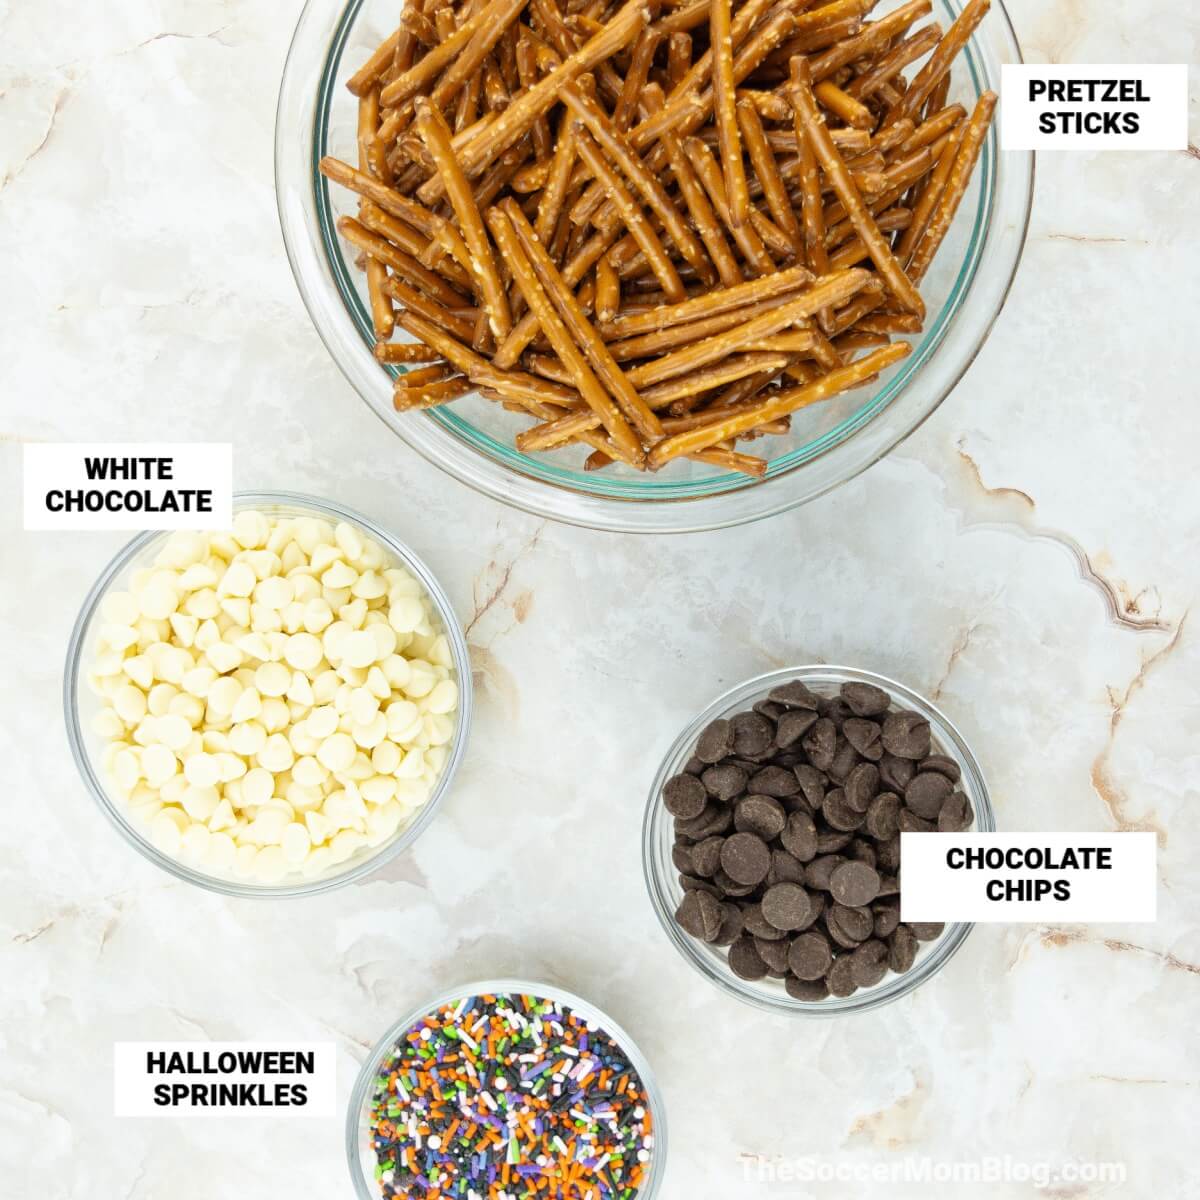 photo of ingredients to make pretzel spiderwebs: pretzel sticks, white chocolate, chocolate chips, and Halloween sprinkles